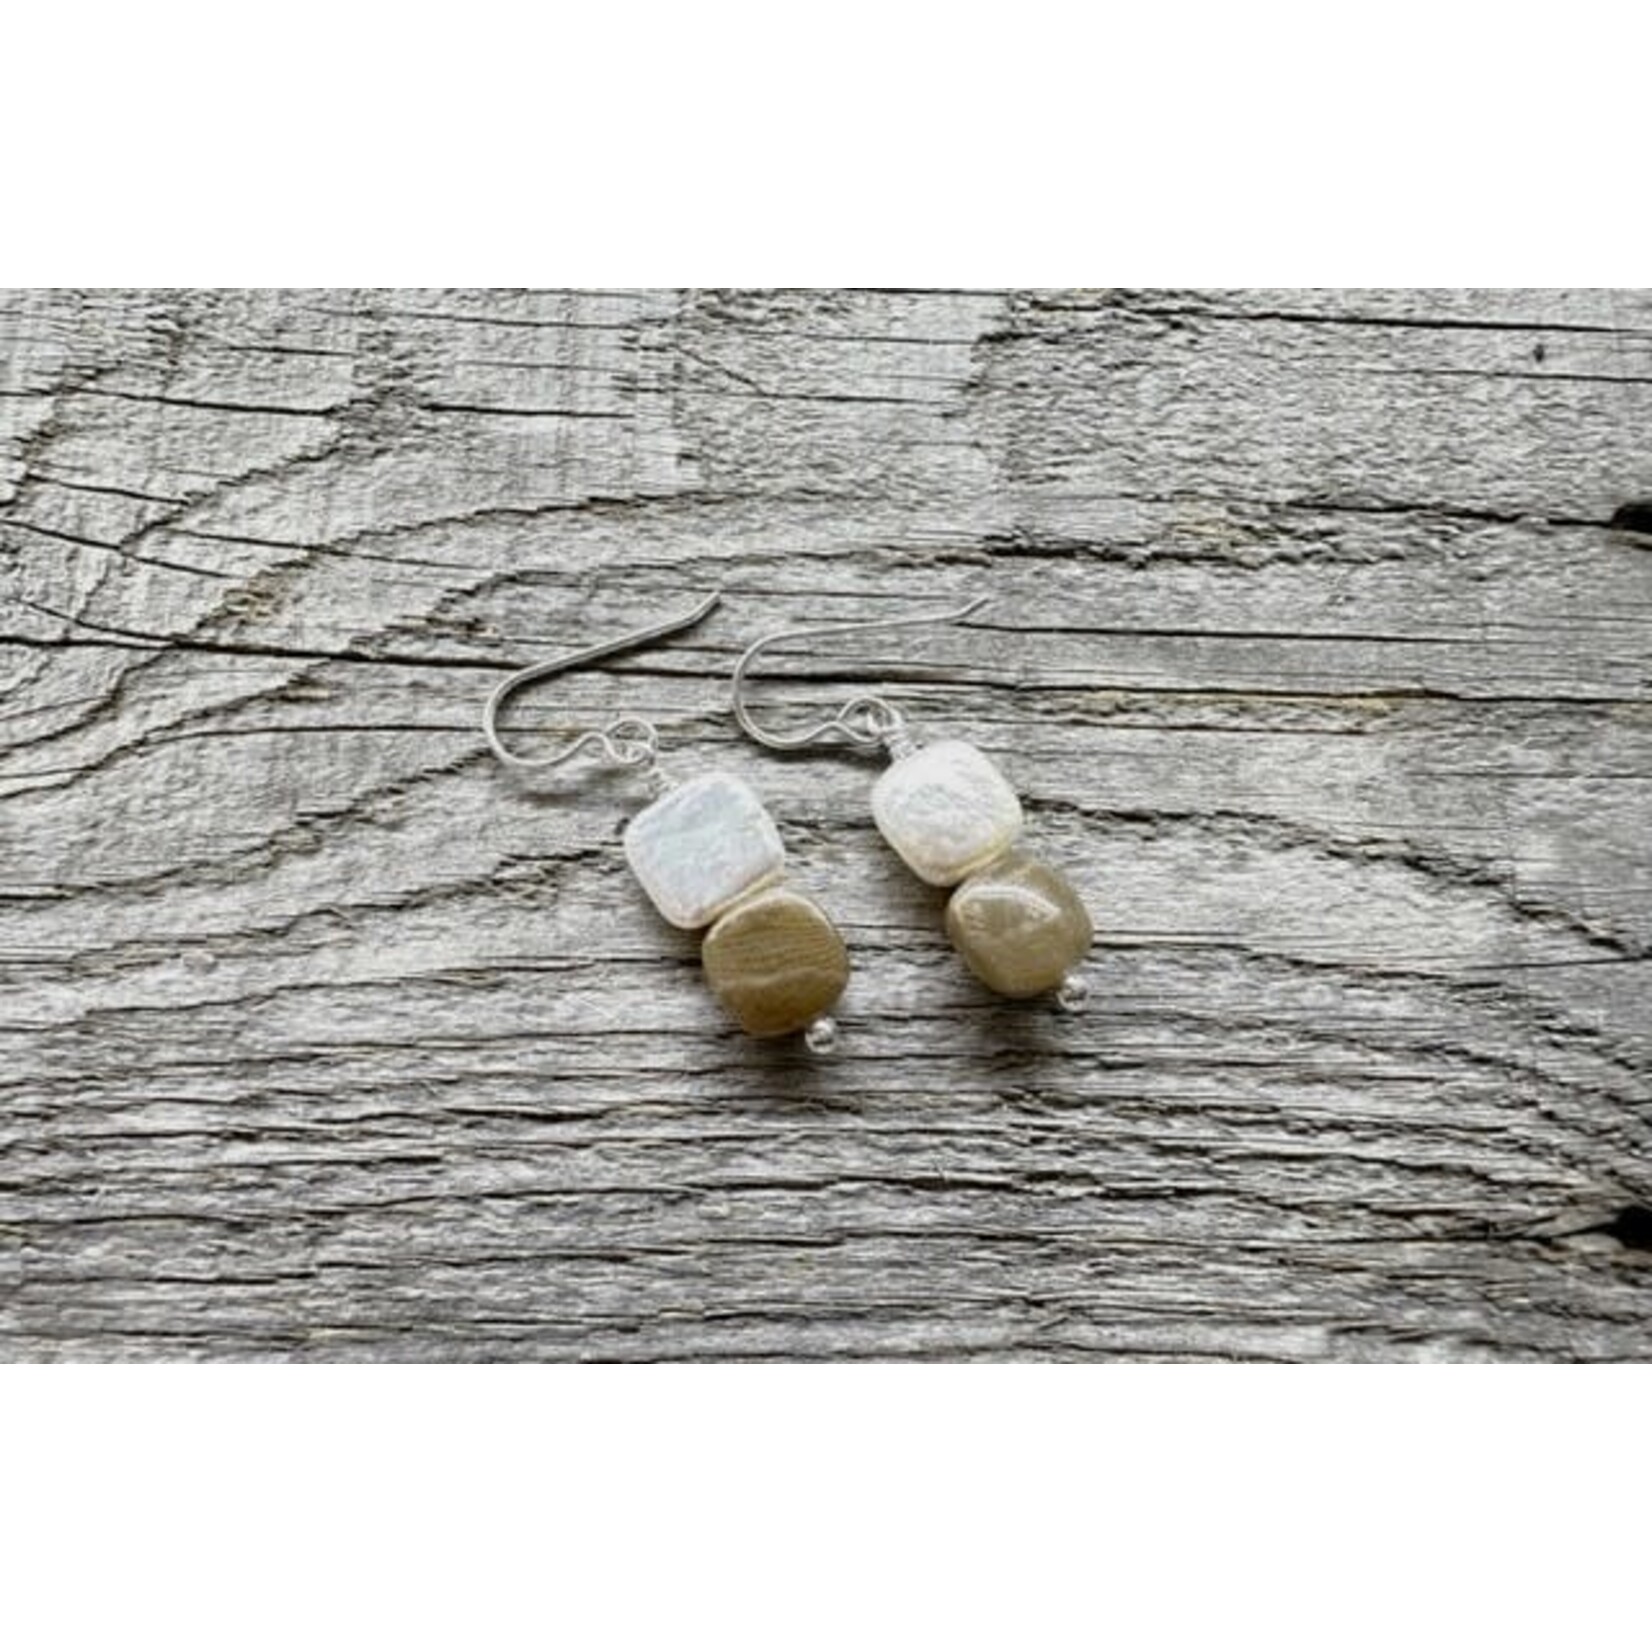 French Hook Earrings - Petoskey Stone & Freshwater Pearl